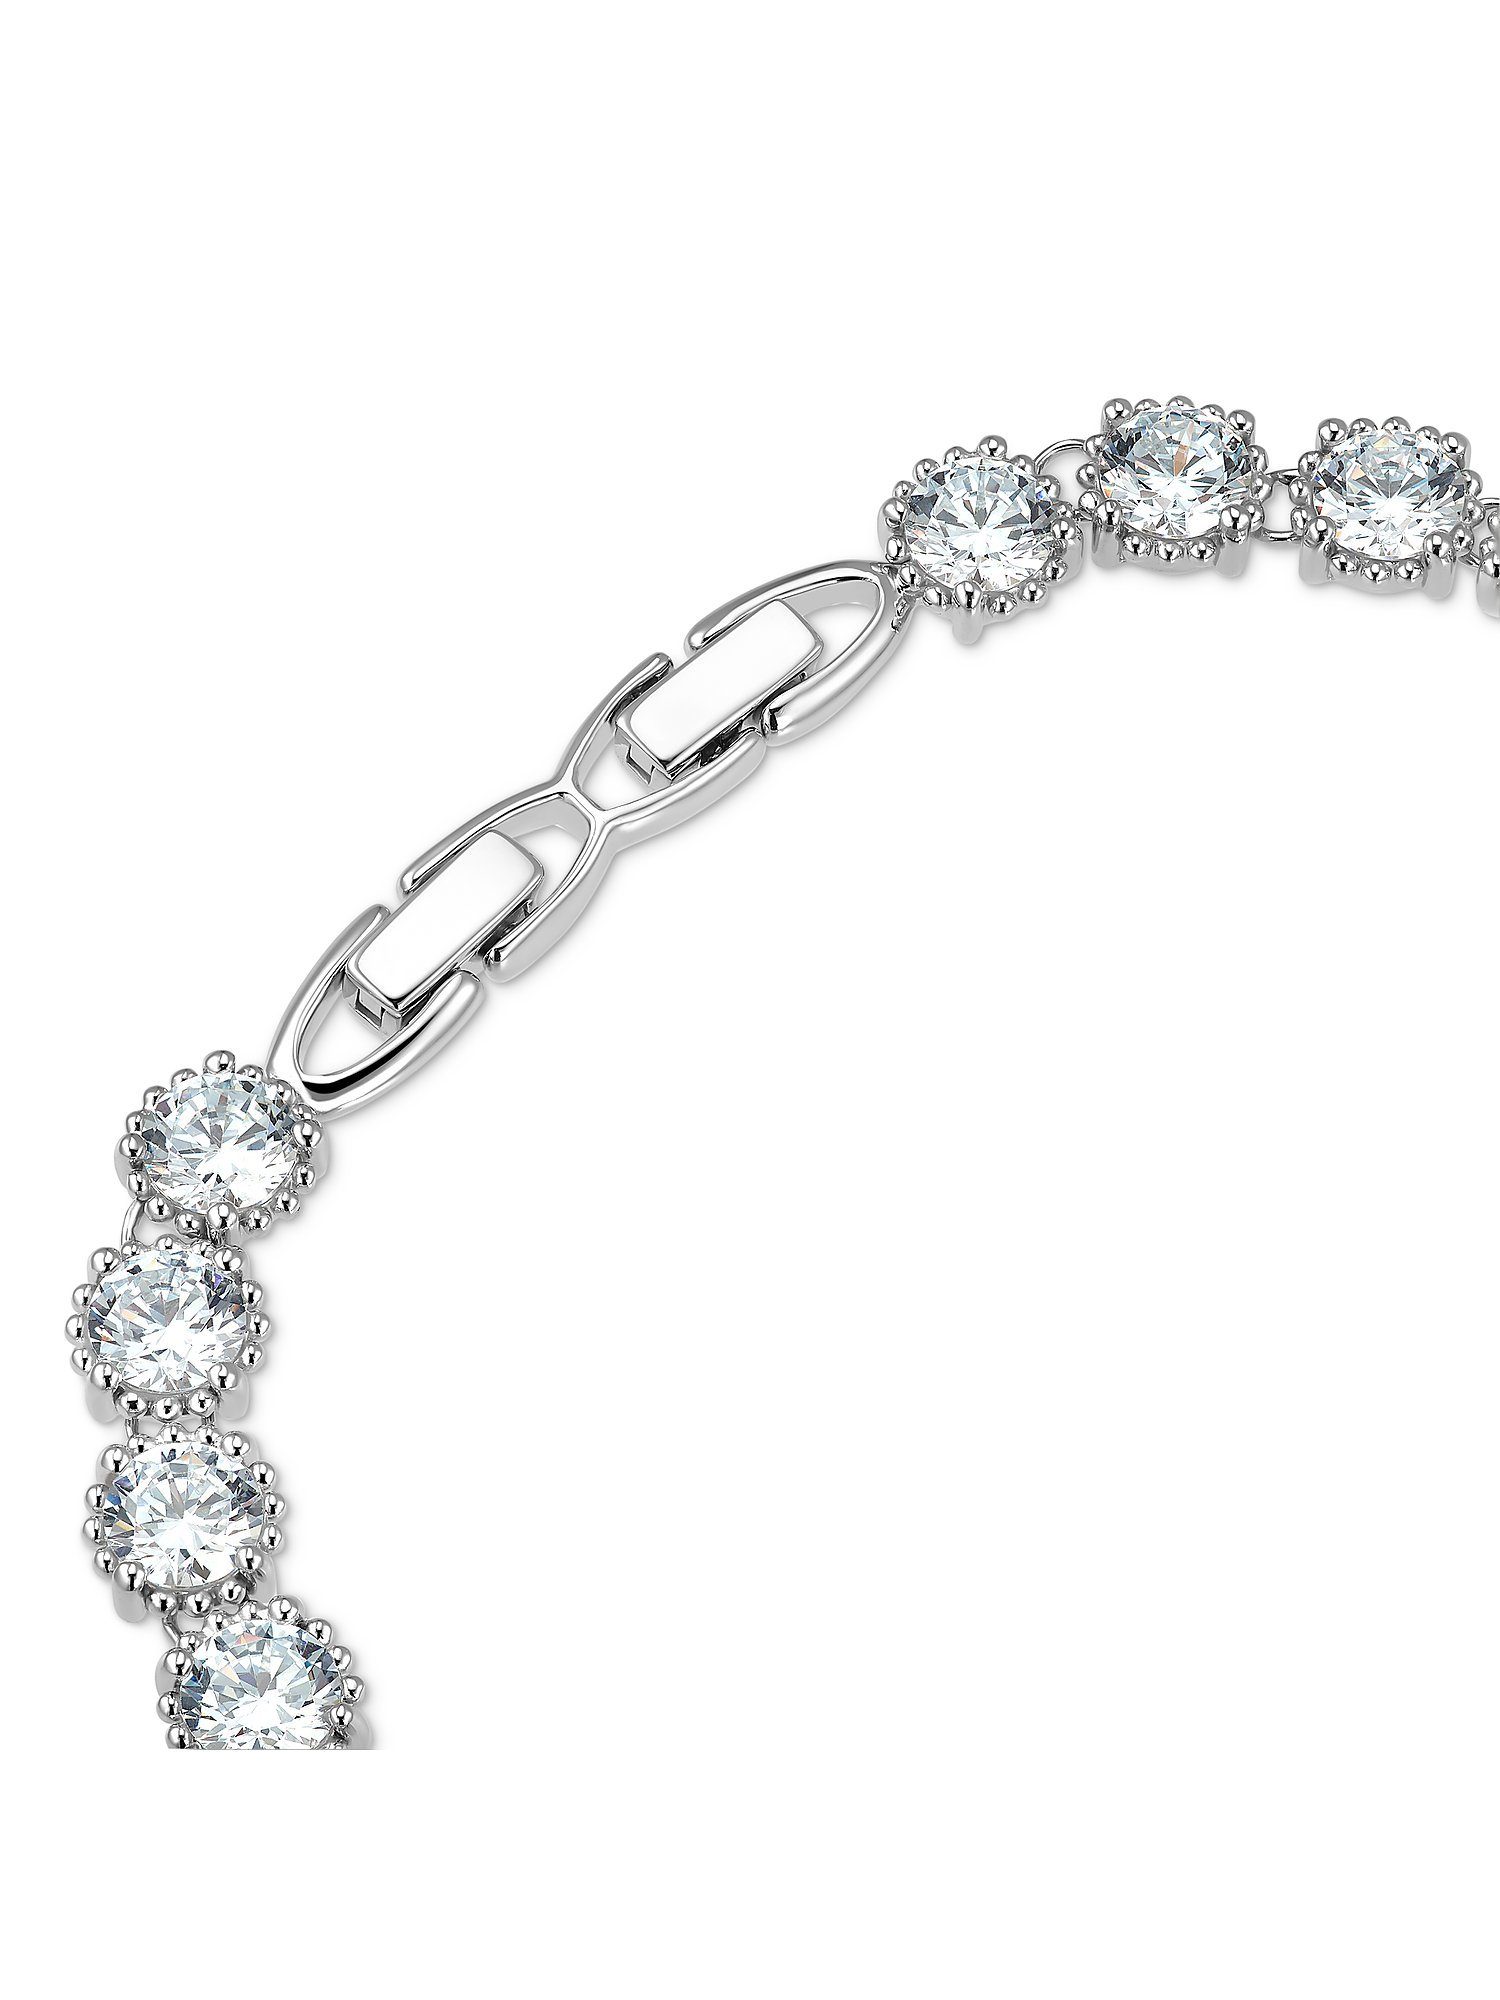 FAVS FAVS Trendig 23 Silberarmband Damen-Armband 925er Silber Zirkonia,